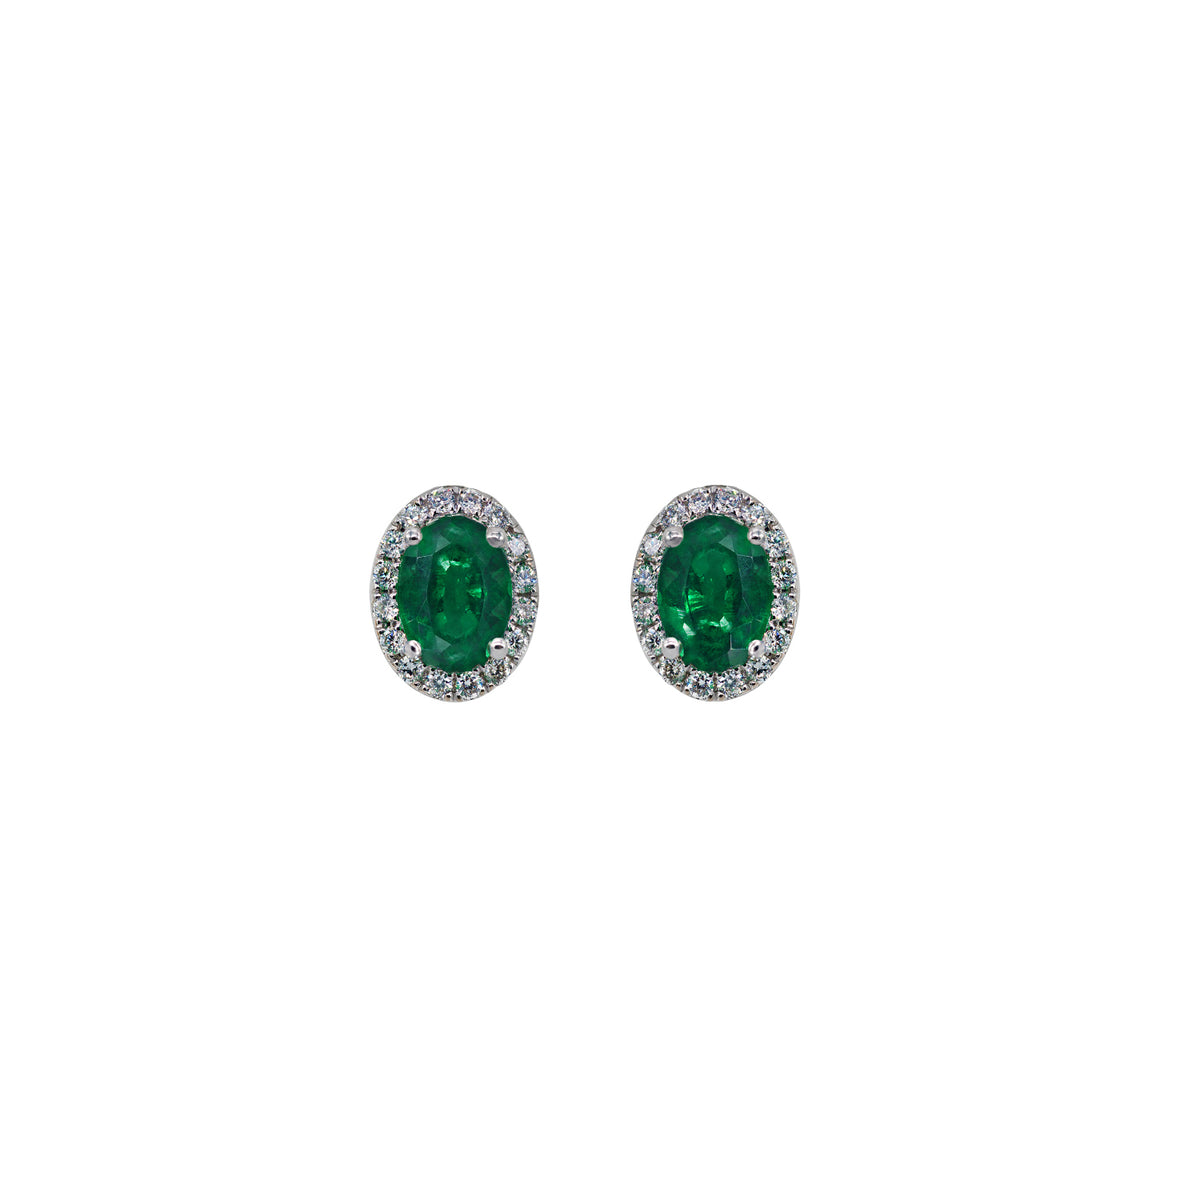 Emerald and diamond earrings. Oval shape emerald earrings